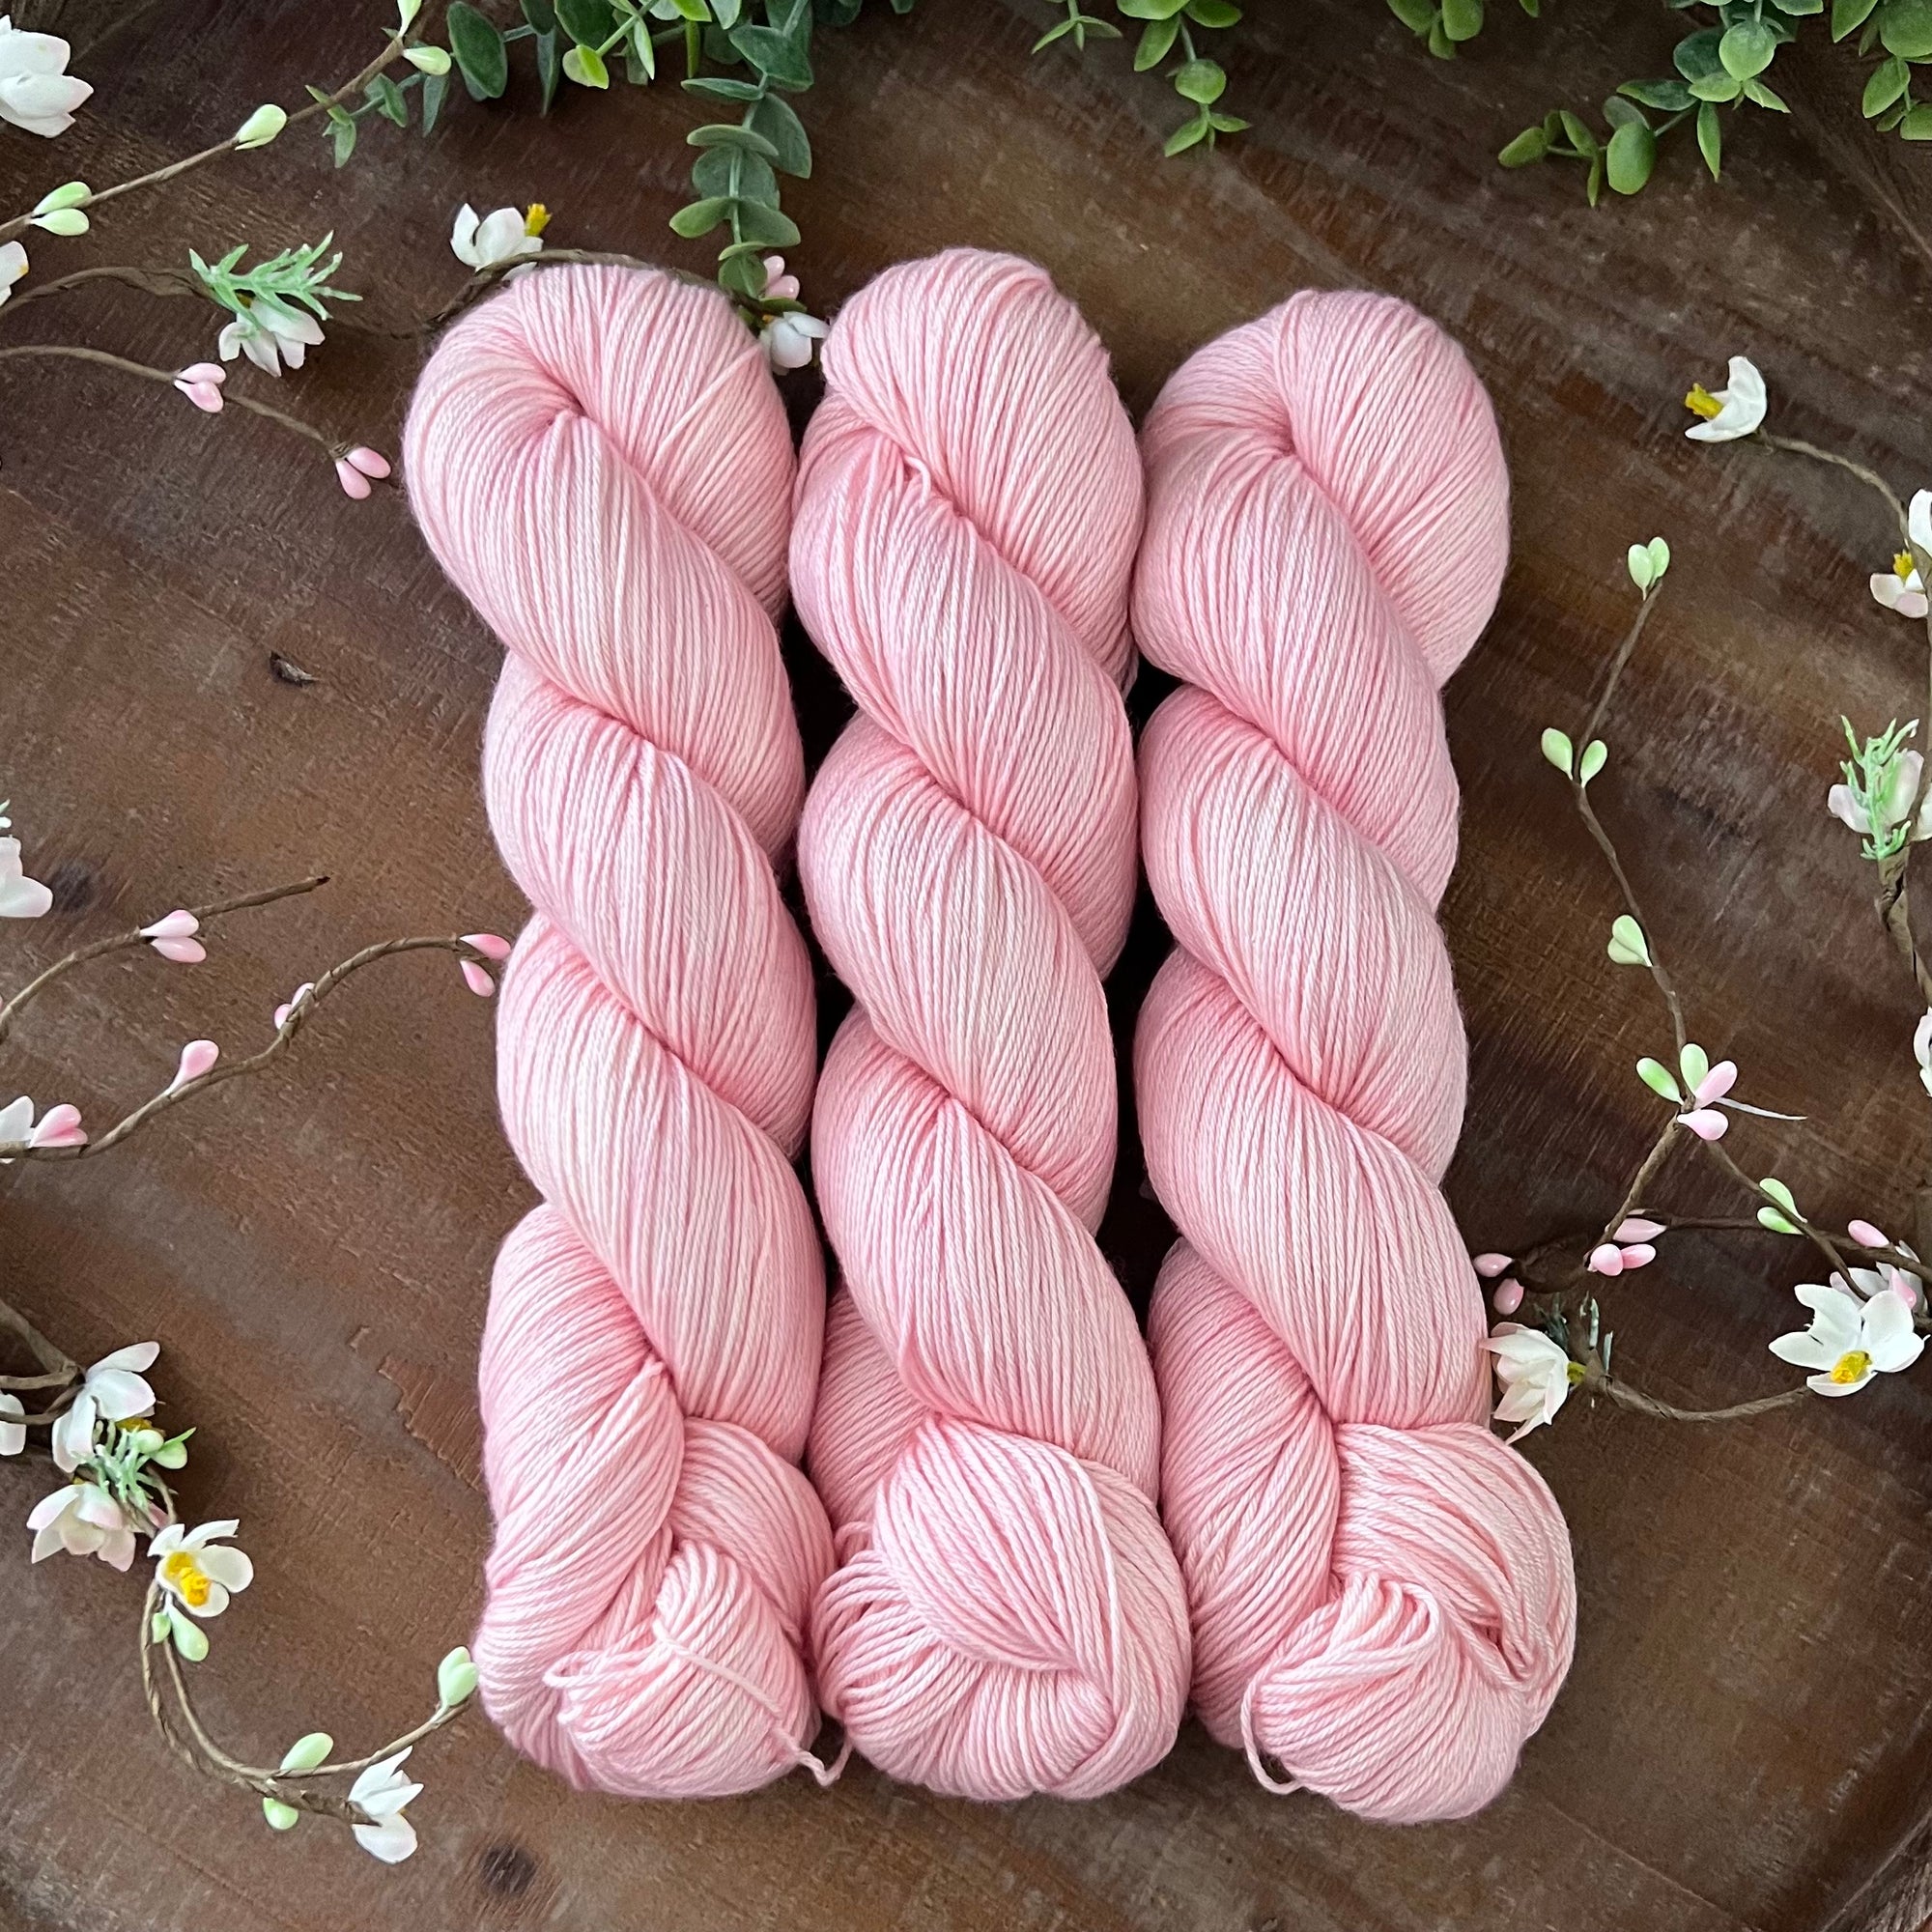 "Ballet Bliss" Merino Cotton 50/50 Hand-dyed Yarn